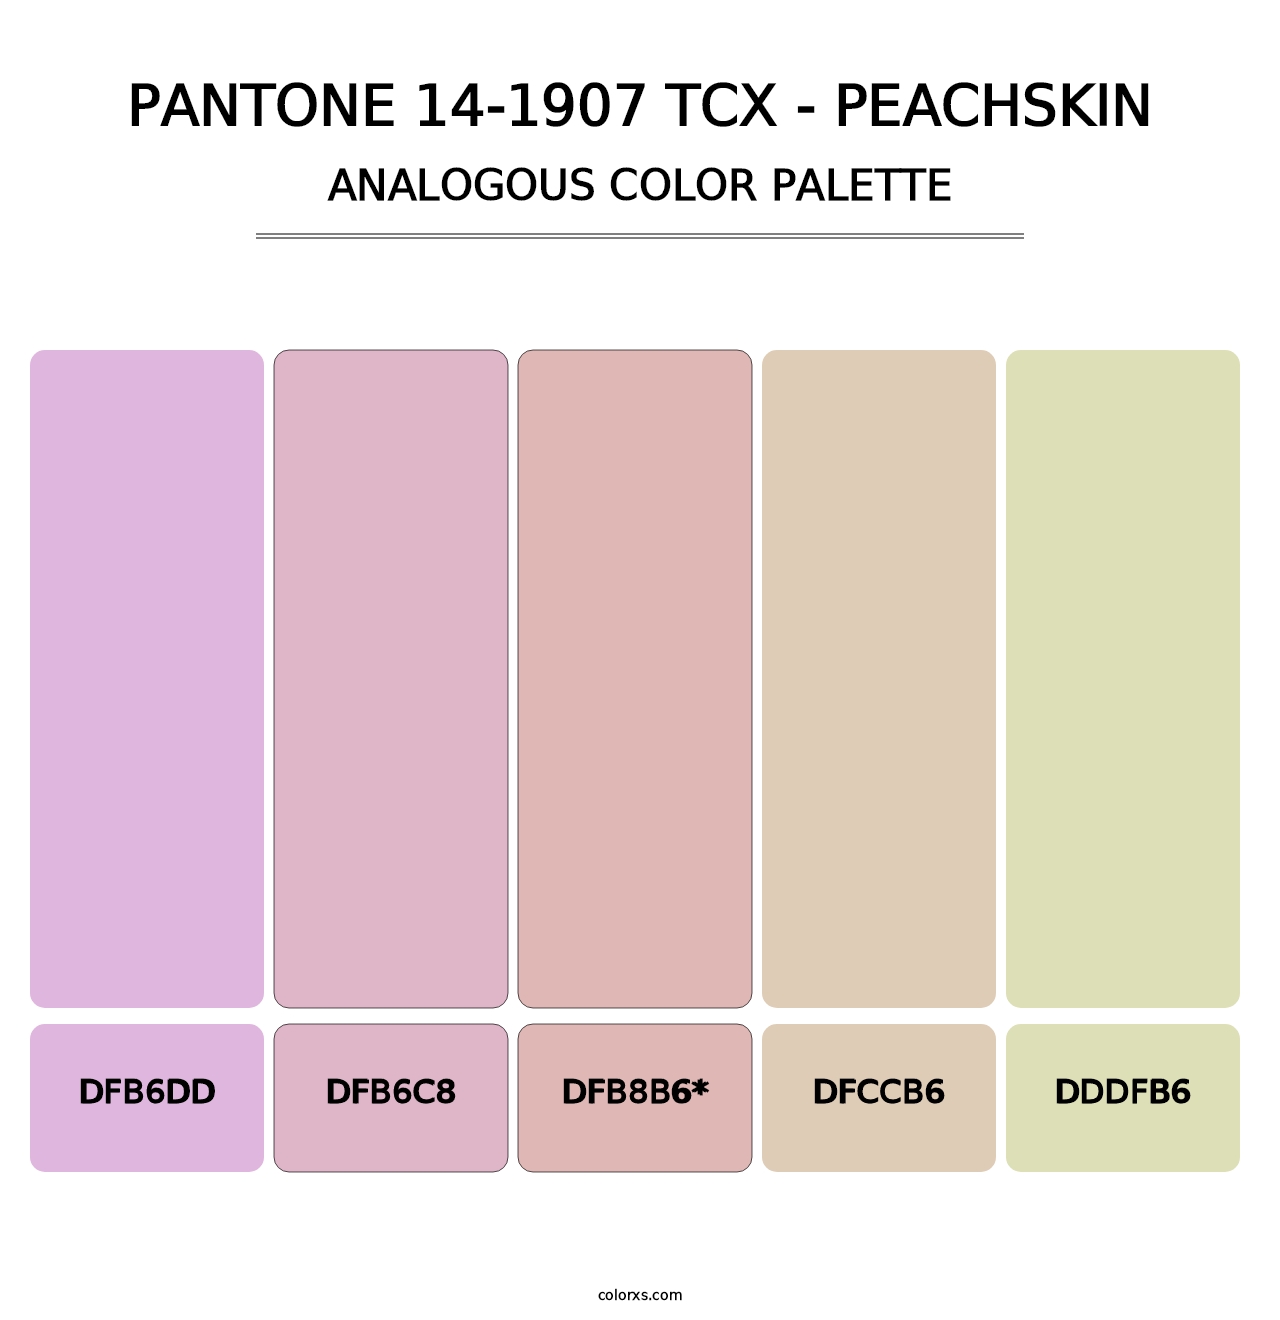 PANTONE 14-1907 TCX - Peachskin - Analogous Color Palette